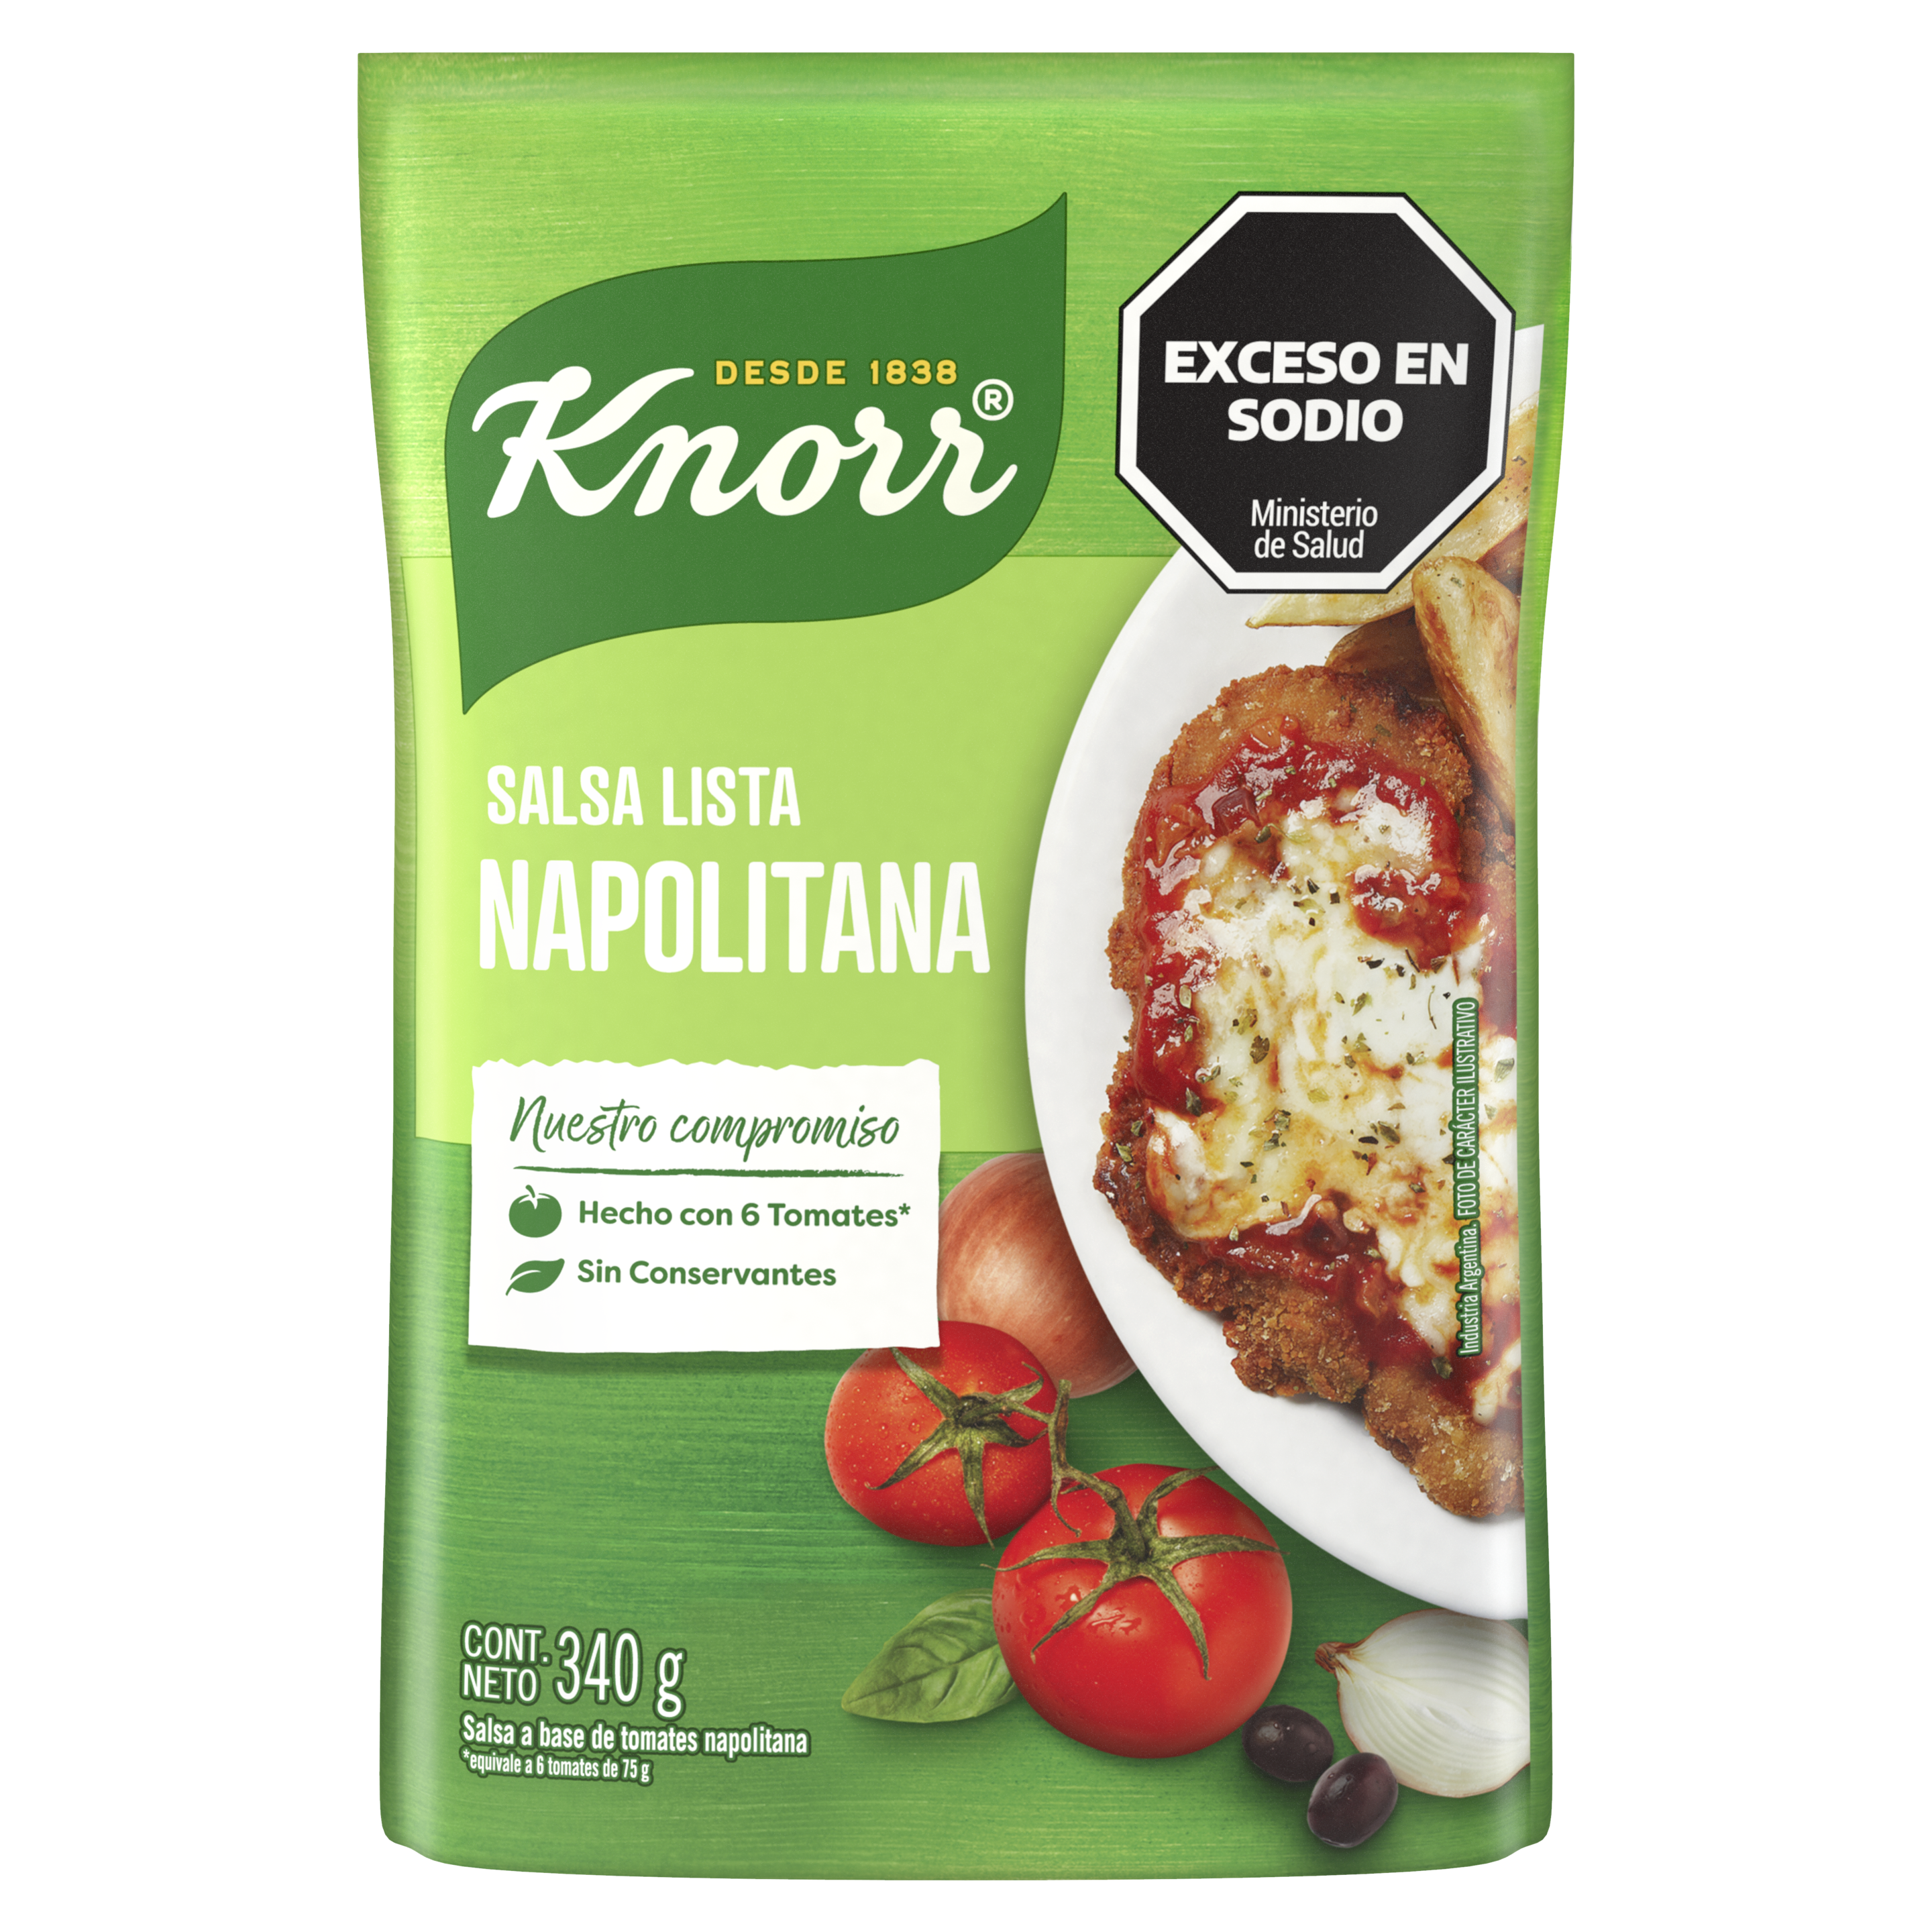 Imagen de envase Salsa Lista Napolitana Knorr